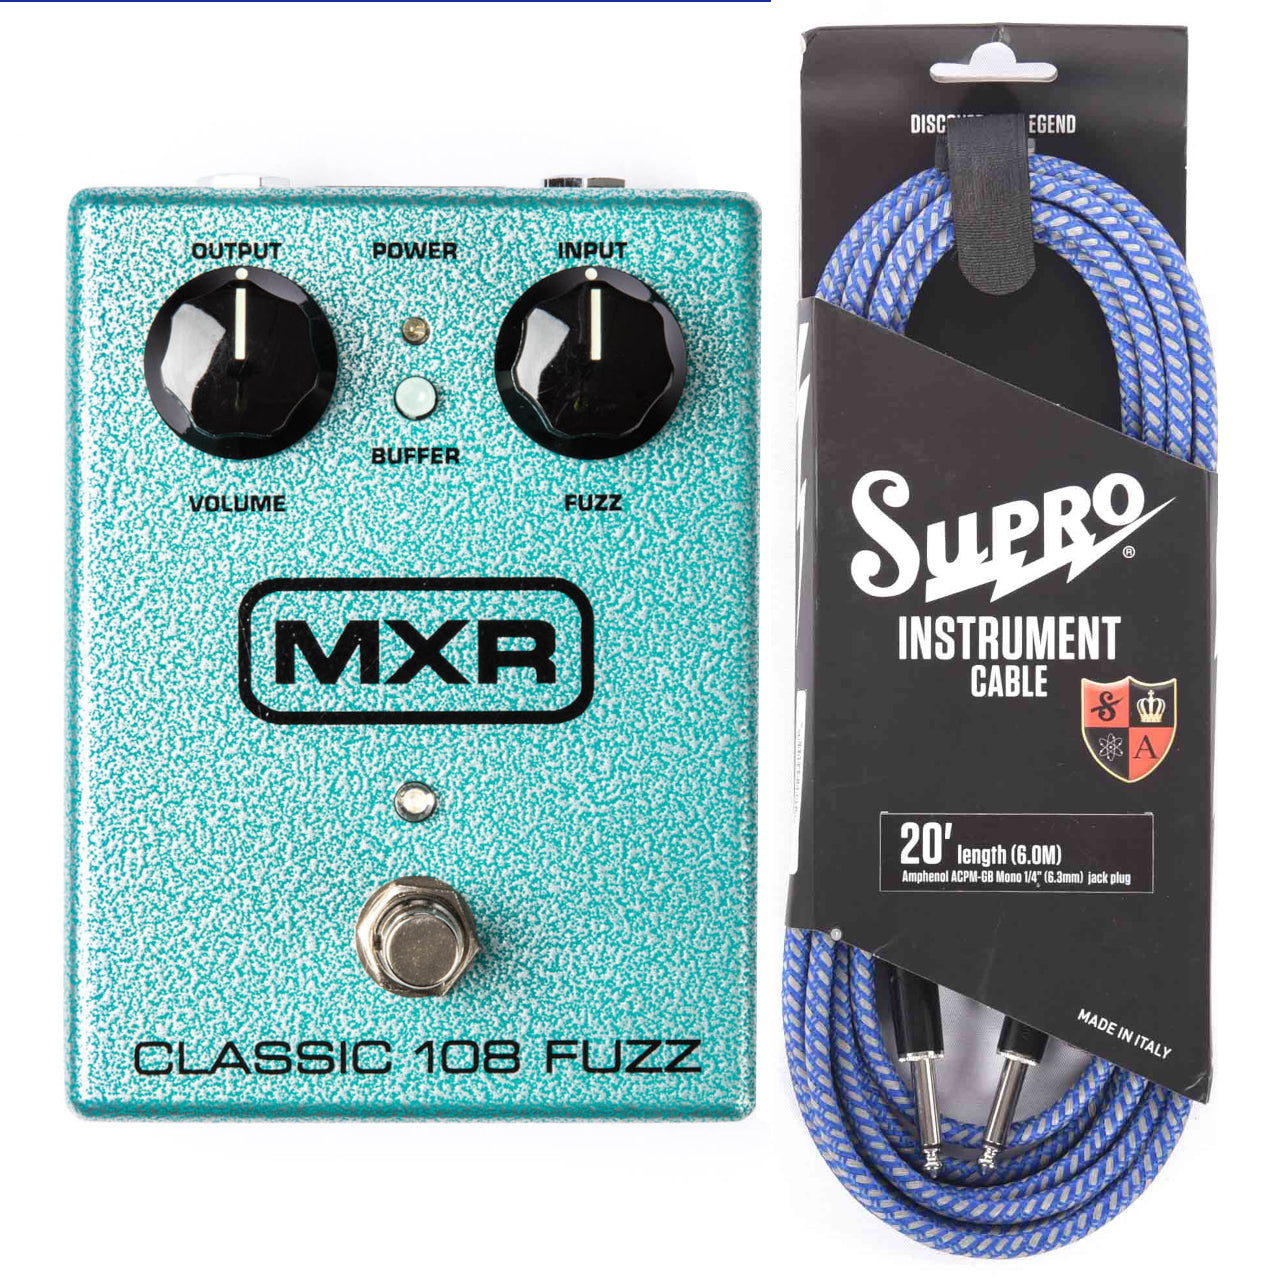 Dunlop MXR M173 Classic 108 Fuzz Guitar Effect Pedal + FREE Supro 20' Cable